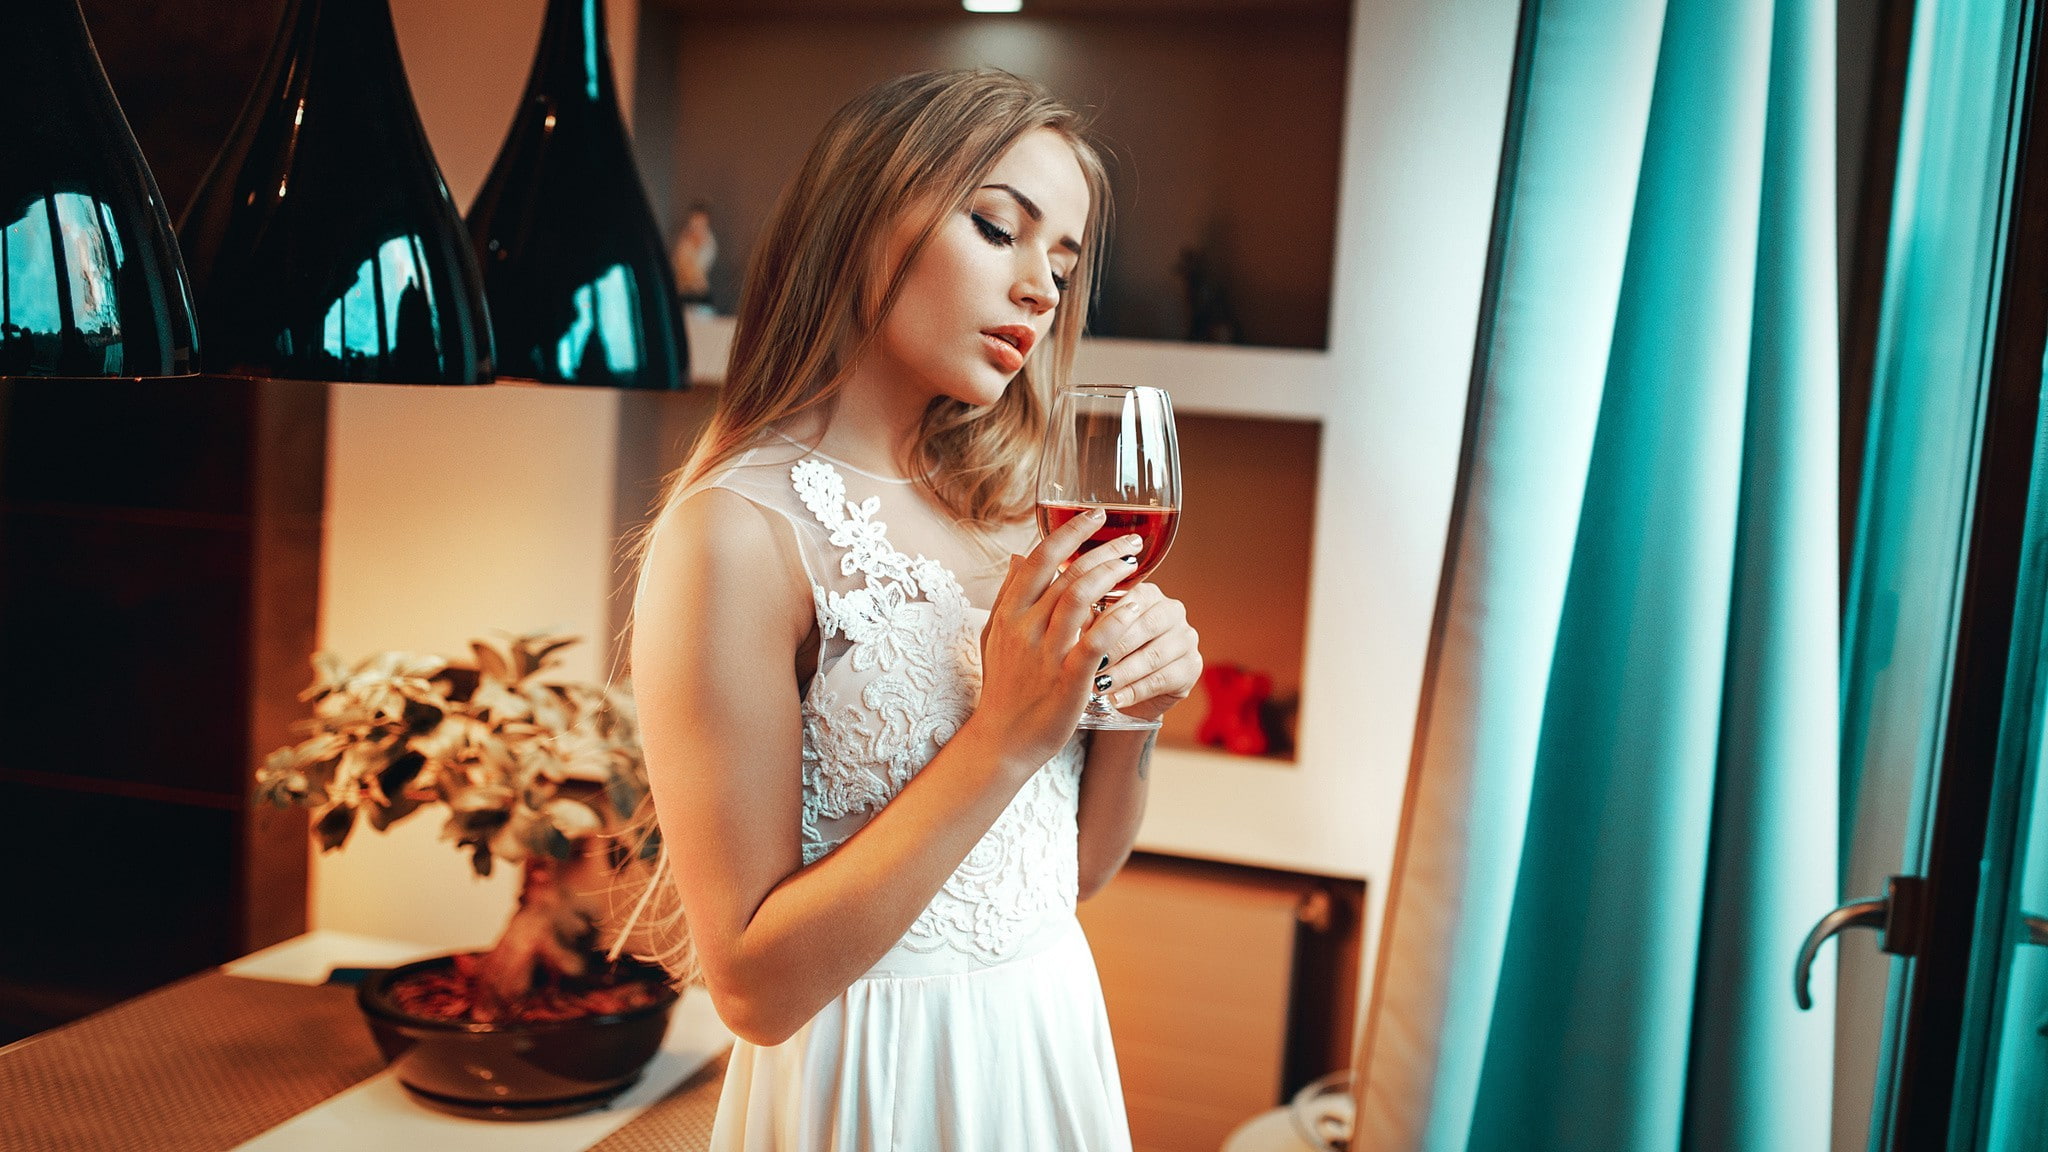 women blonde face standing juicy lips peter paszternak model glass dress portrait colorful